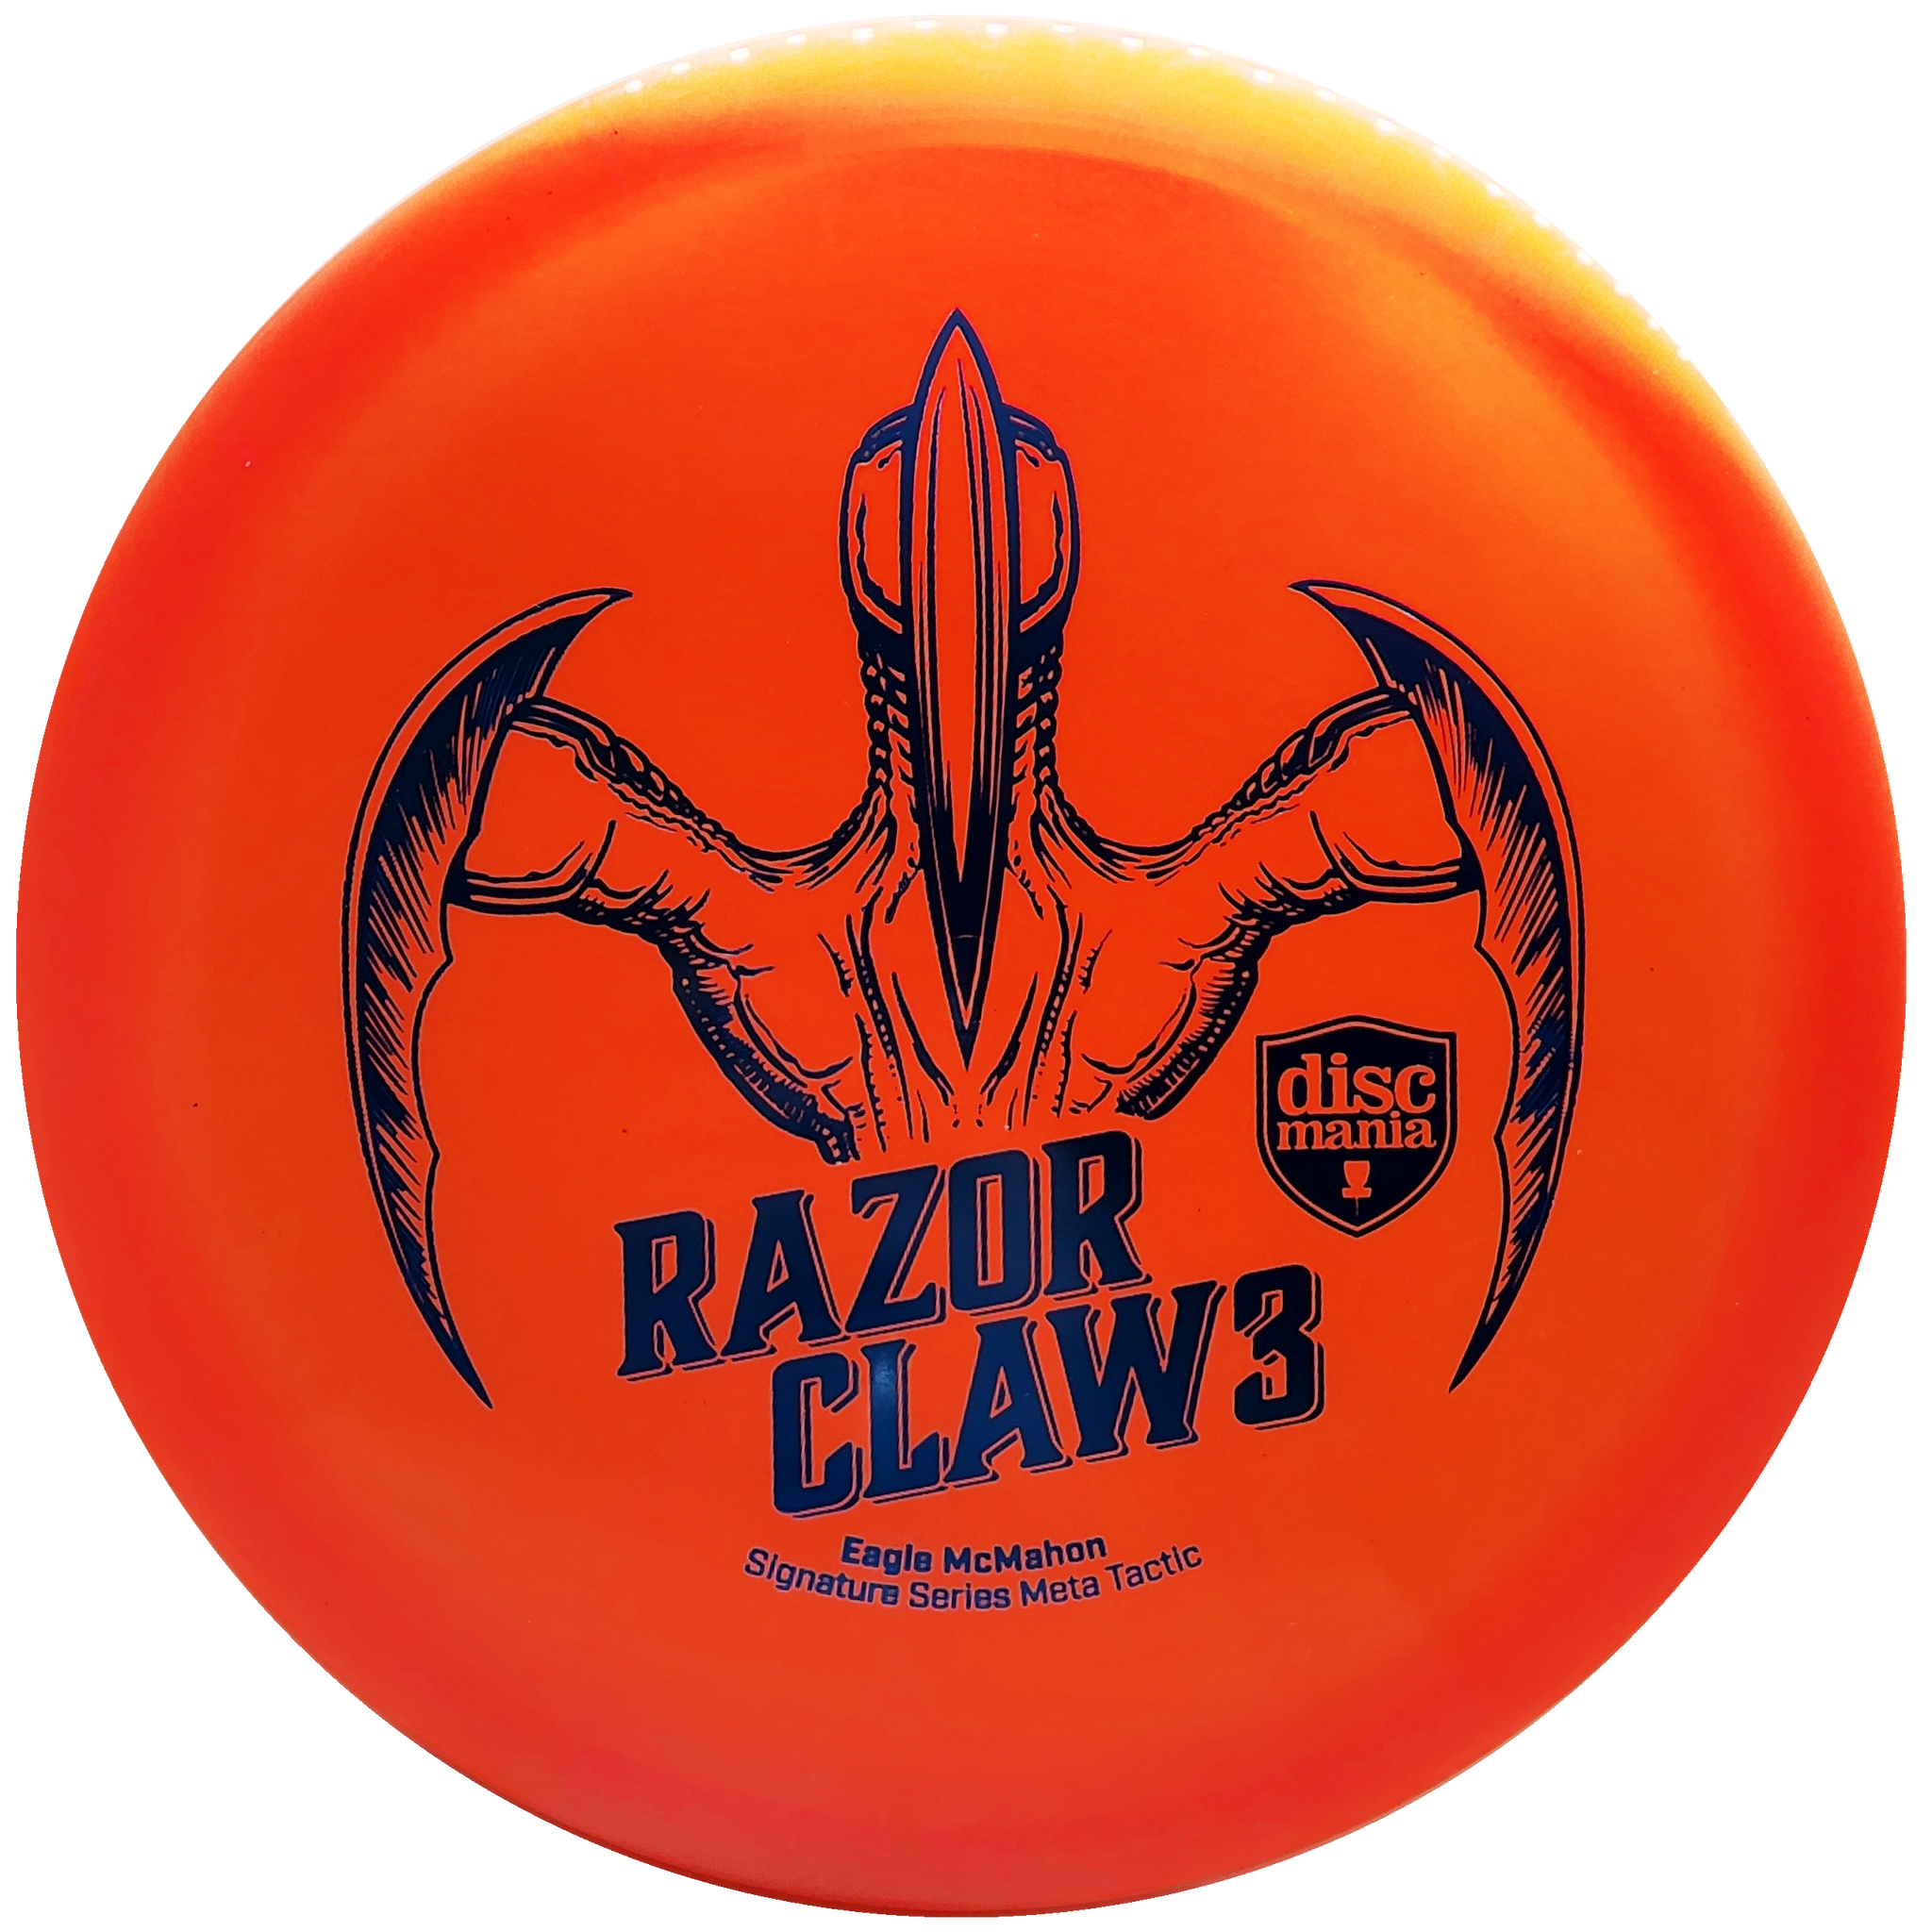 Discmania: Razor Claw 3 - Eagle McMahon Signature Special Blend Tactic - Orange/Dark Blue